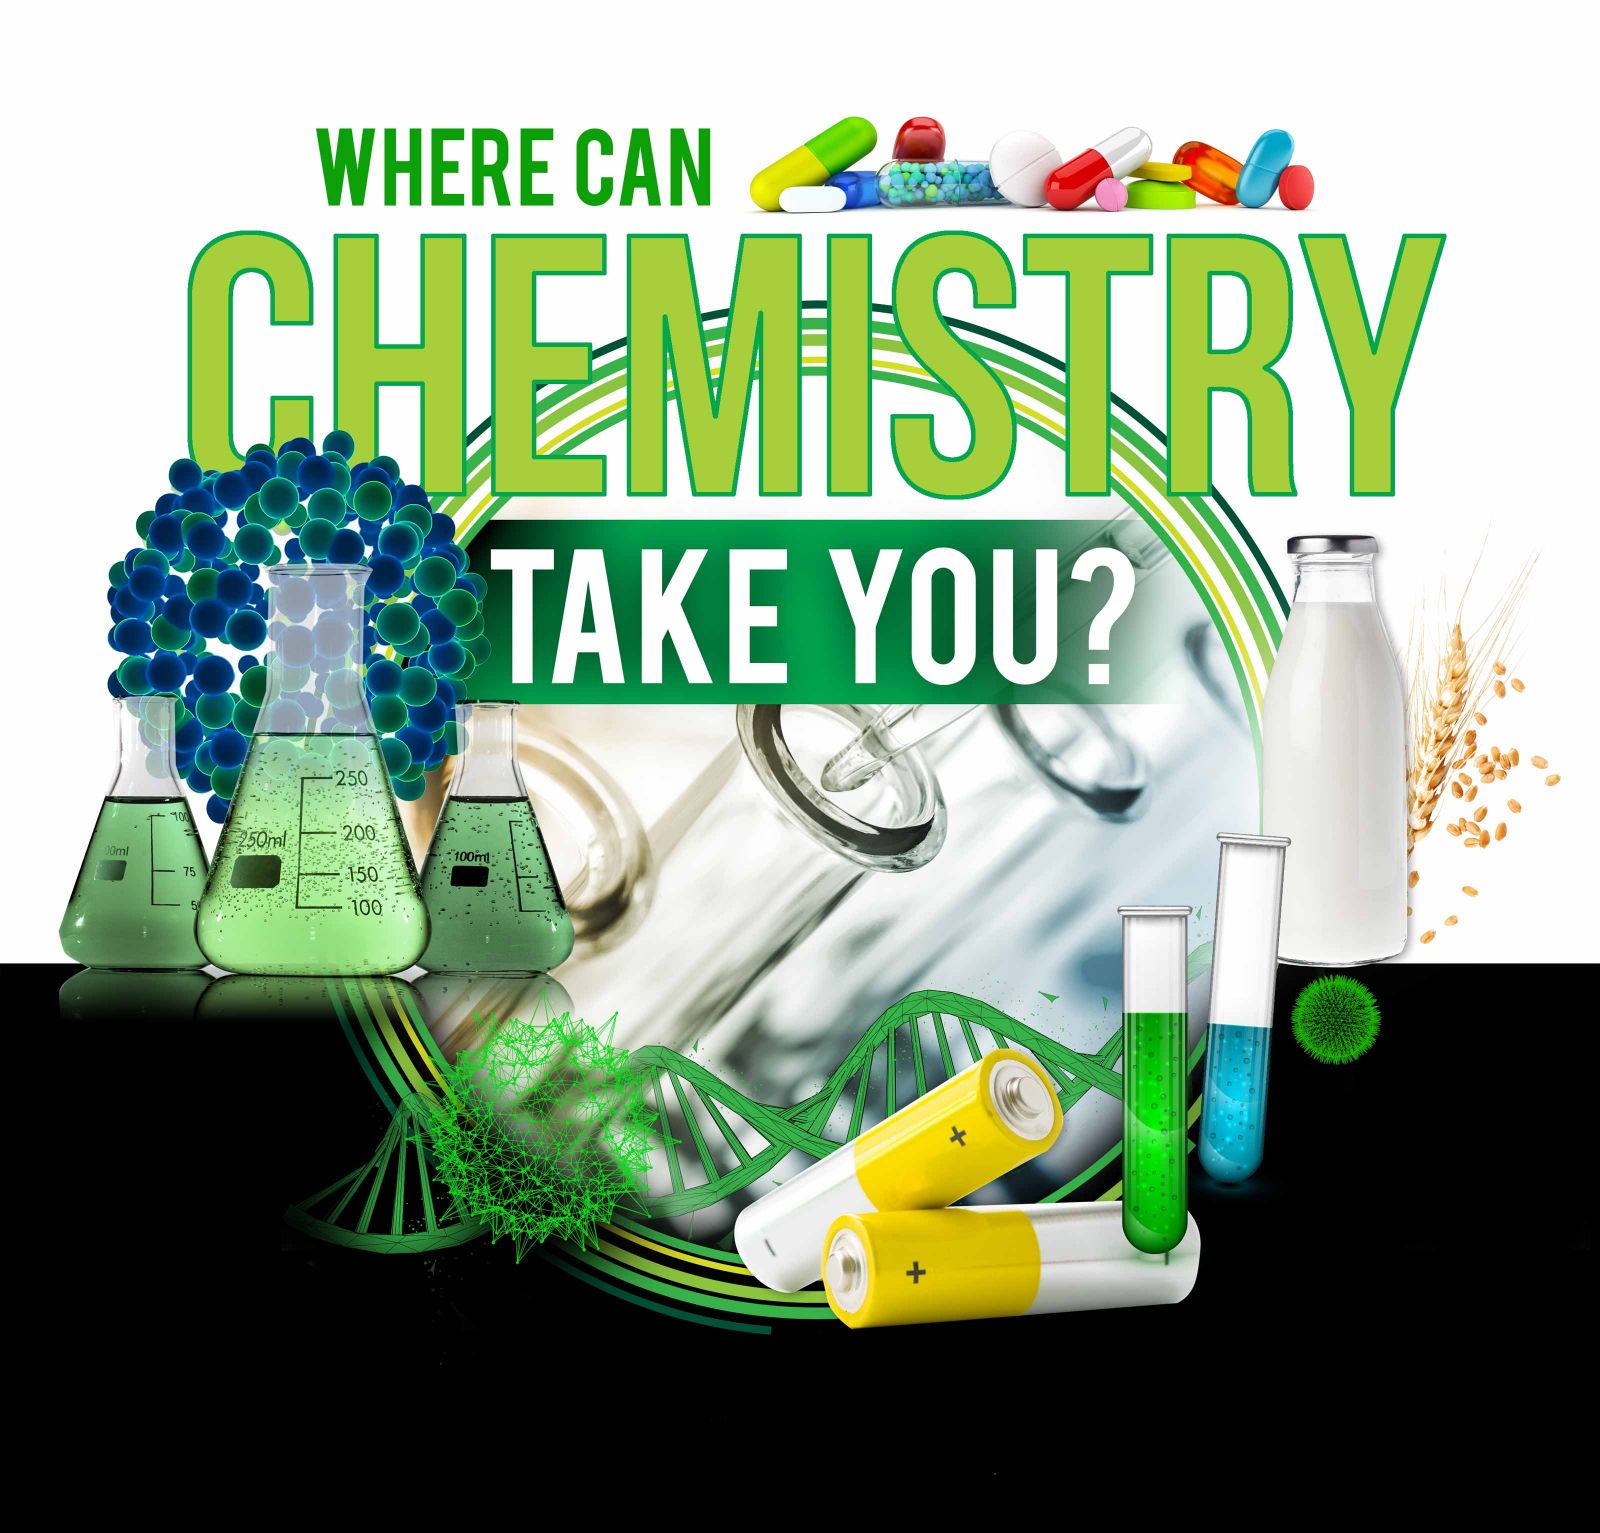 chemistry poster